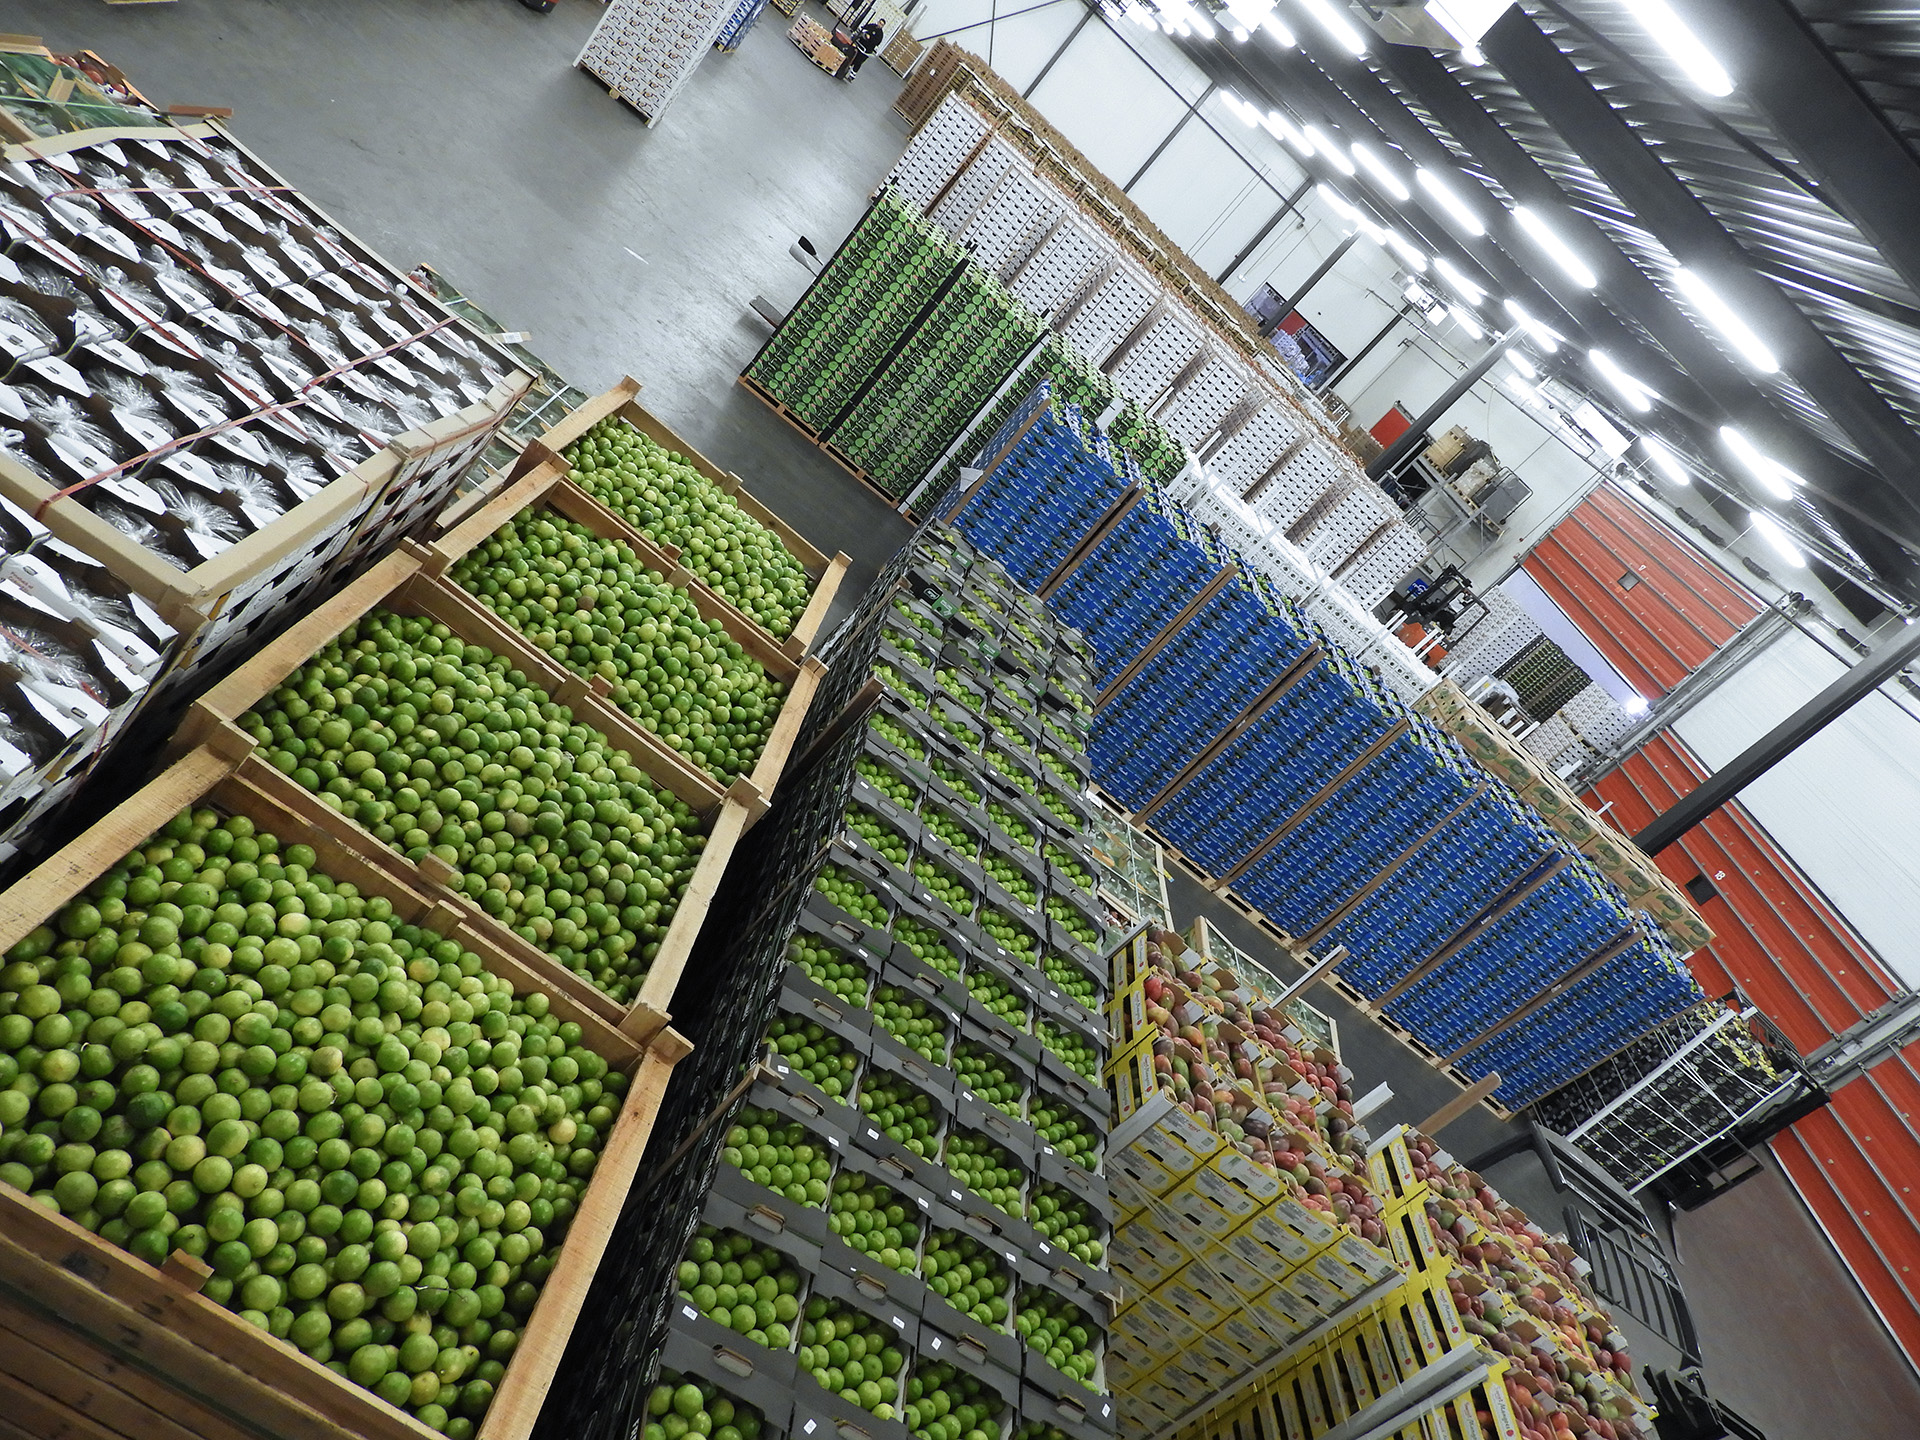 Retail & fresh produce quality monitoring